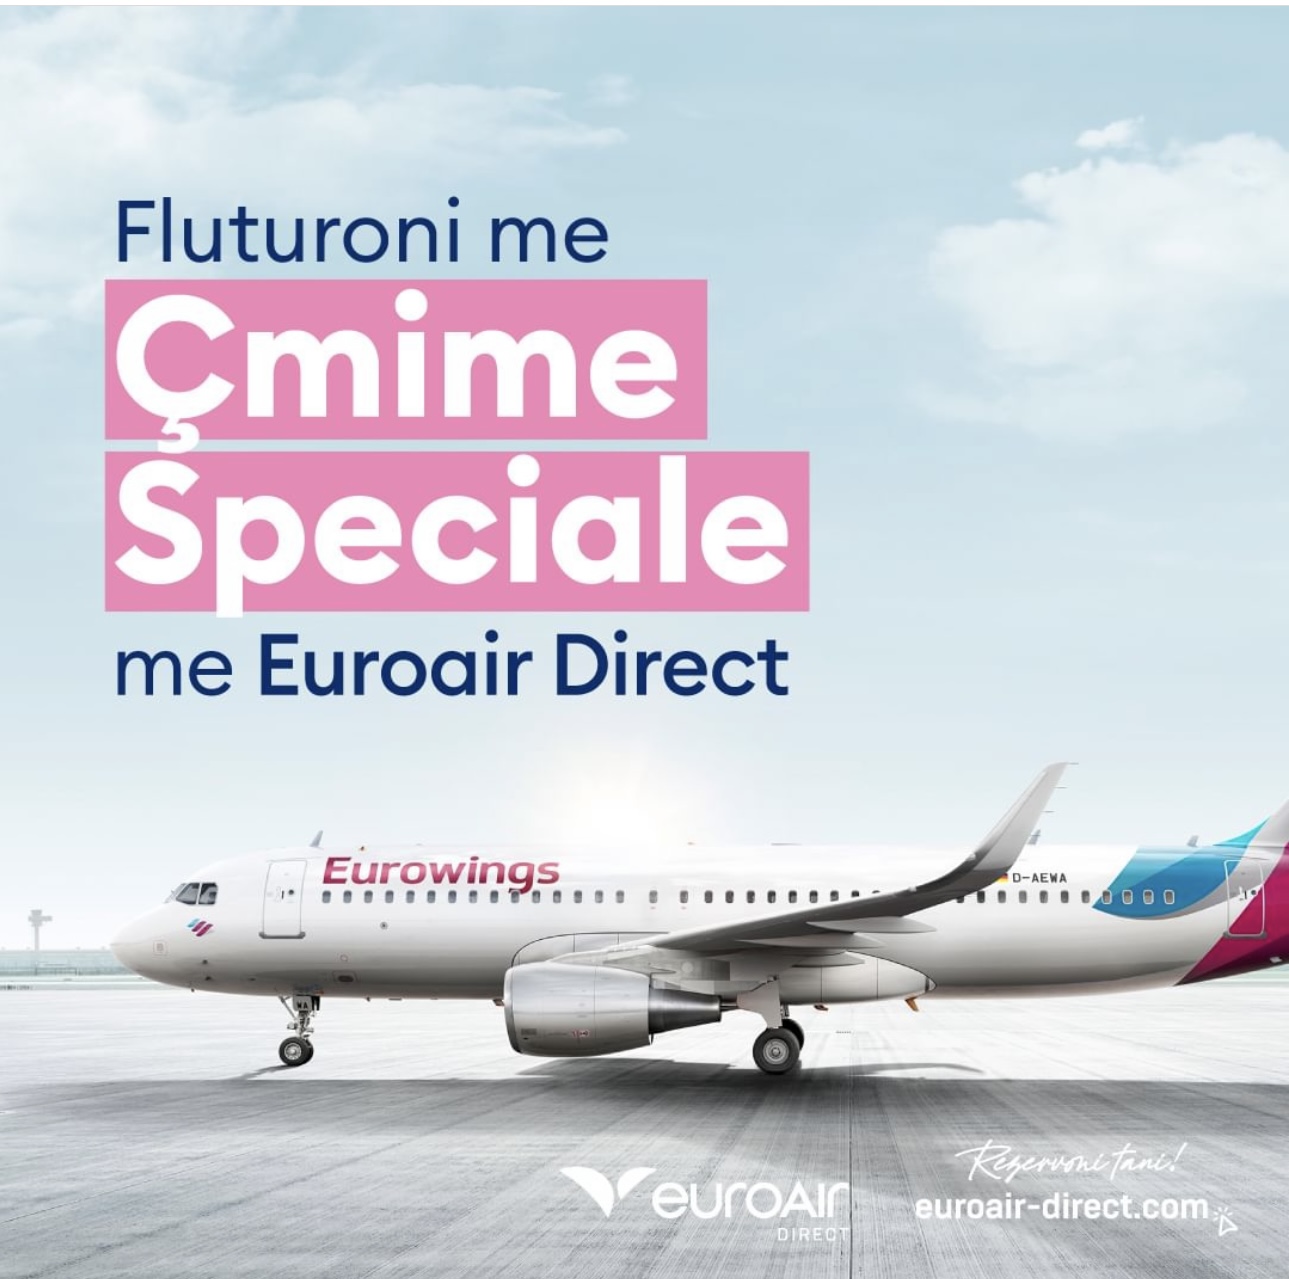 Fluturoni me Euroair Direct, bileta me çmime speciale